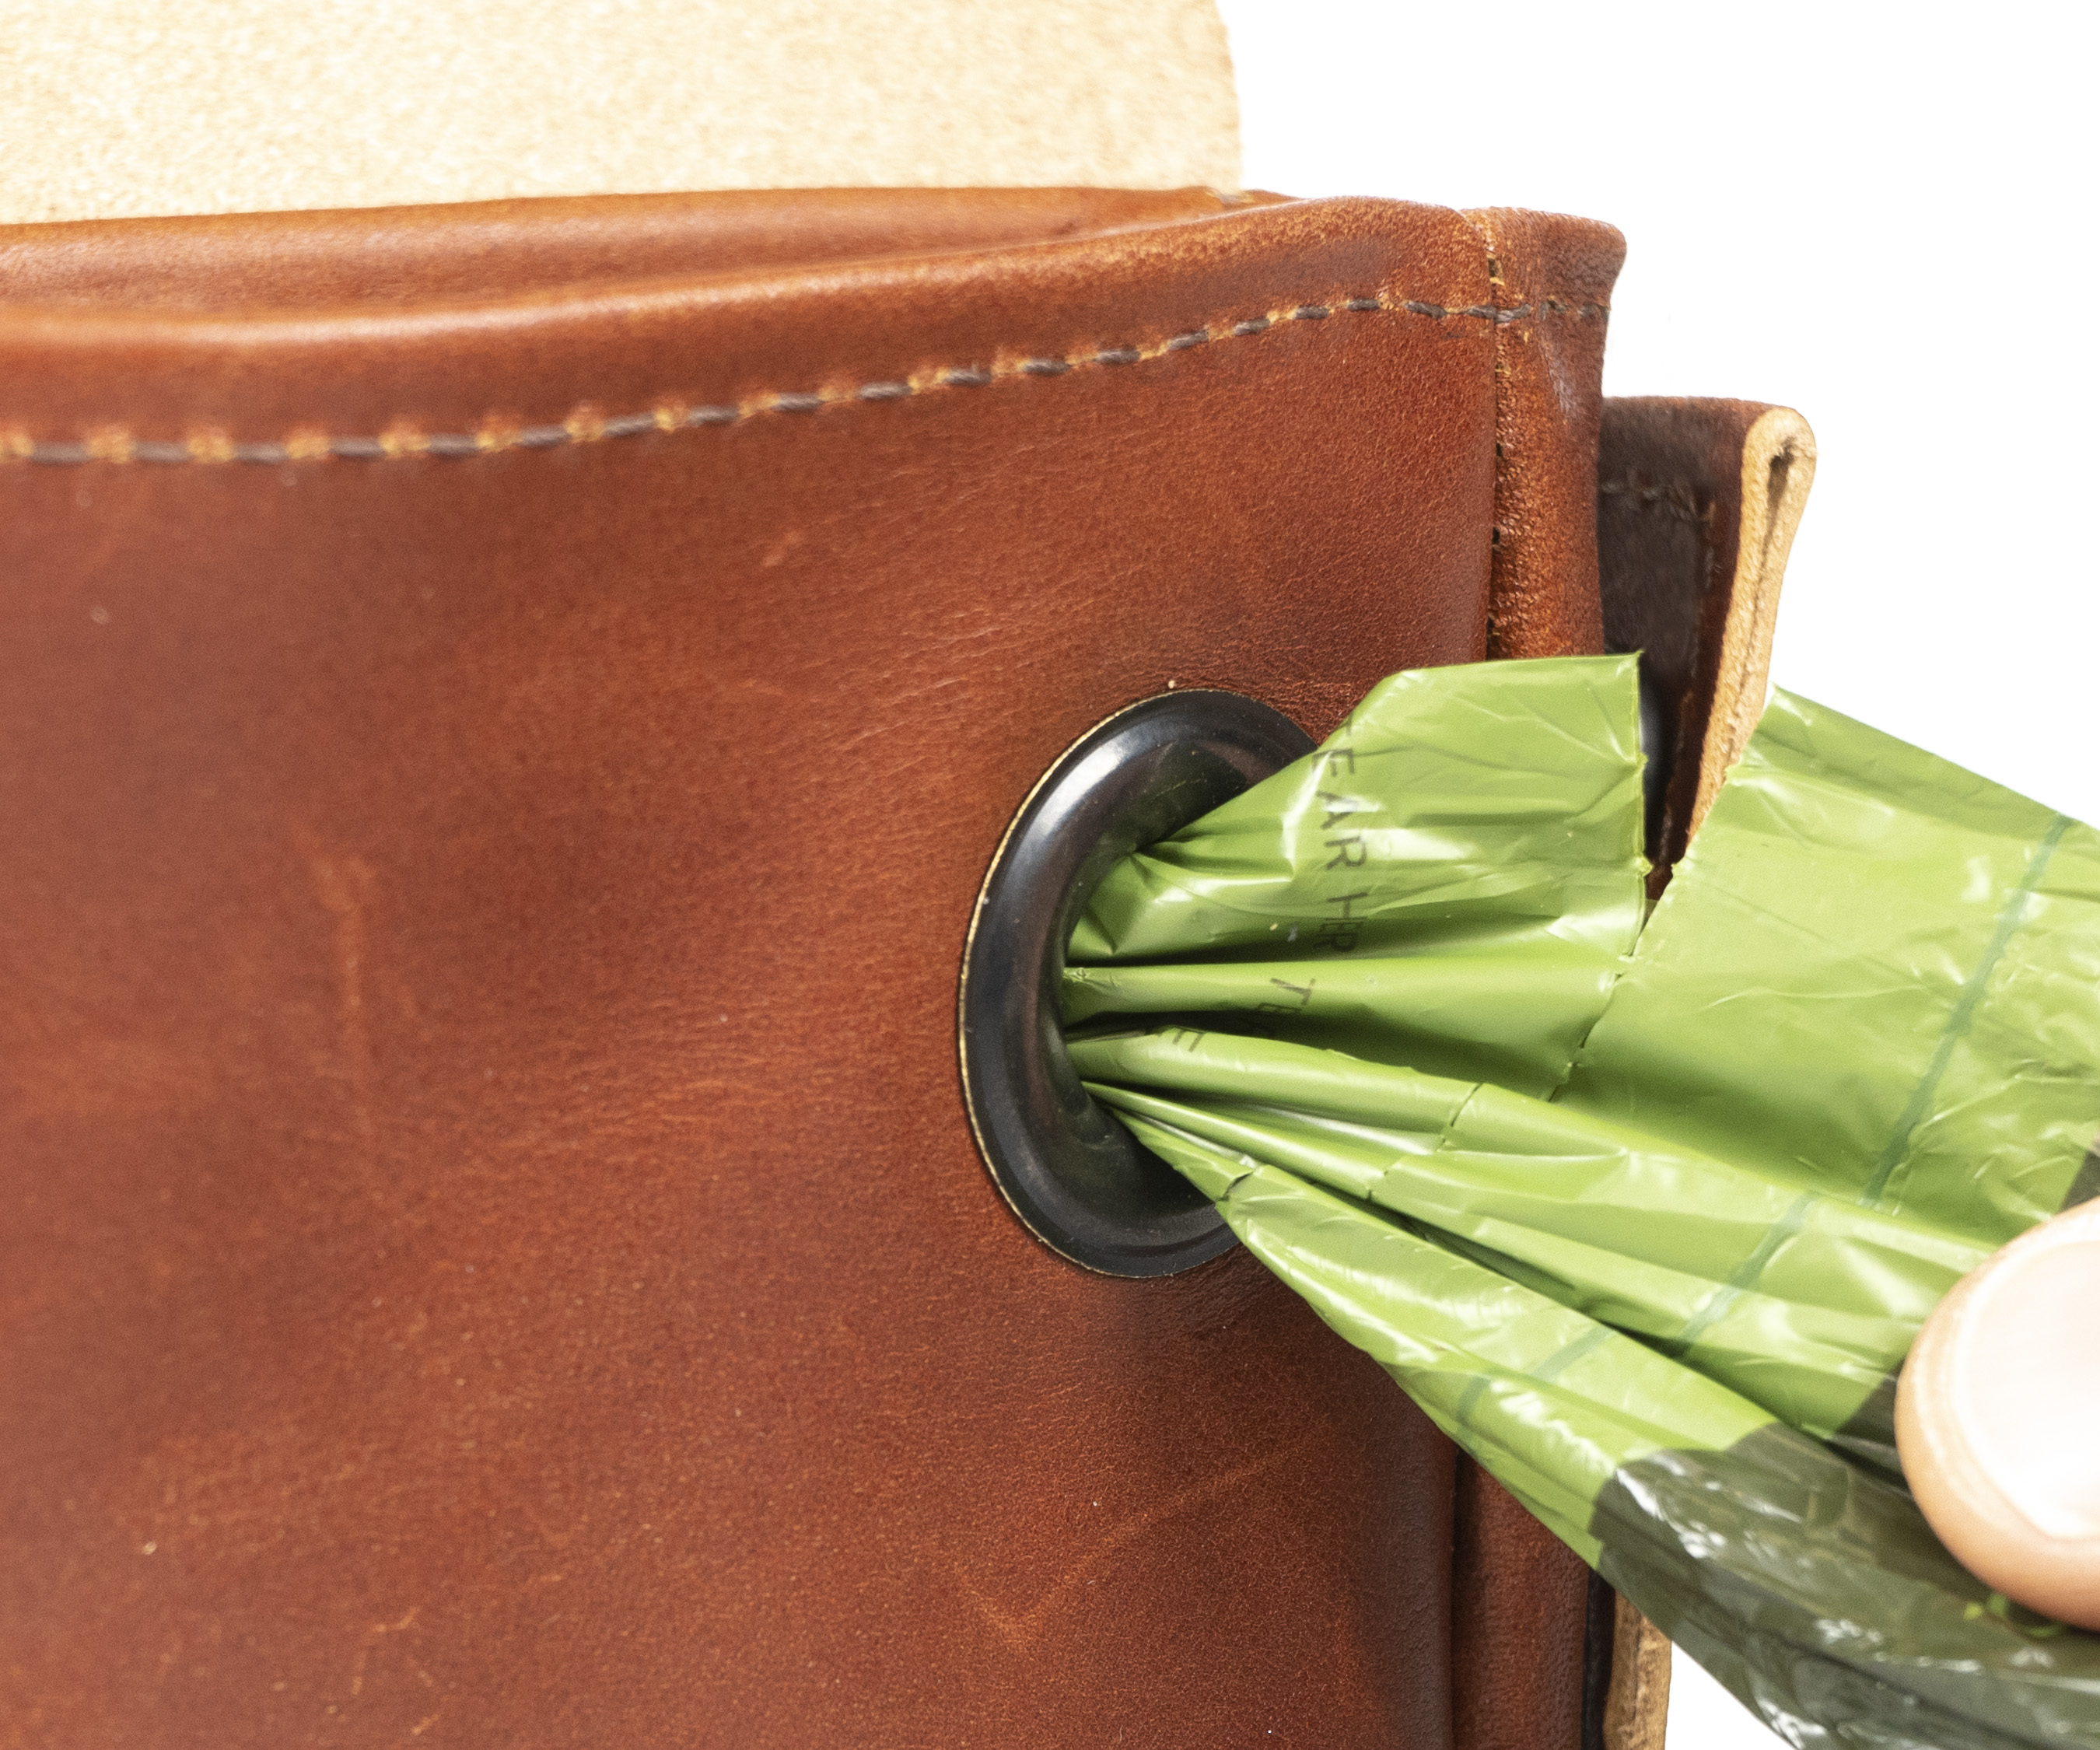 Poop-bag dispenser hides discreetly behind a full-grain leather flap